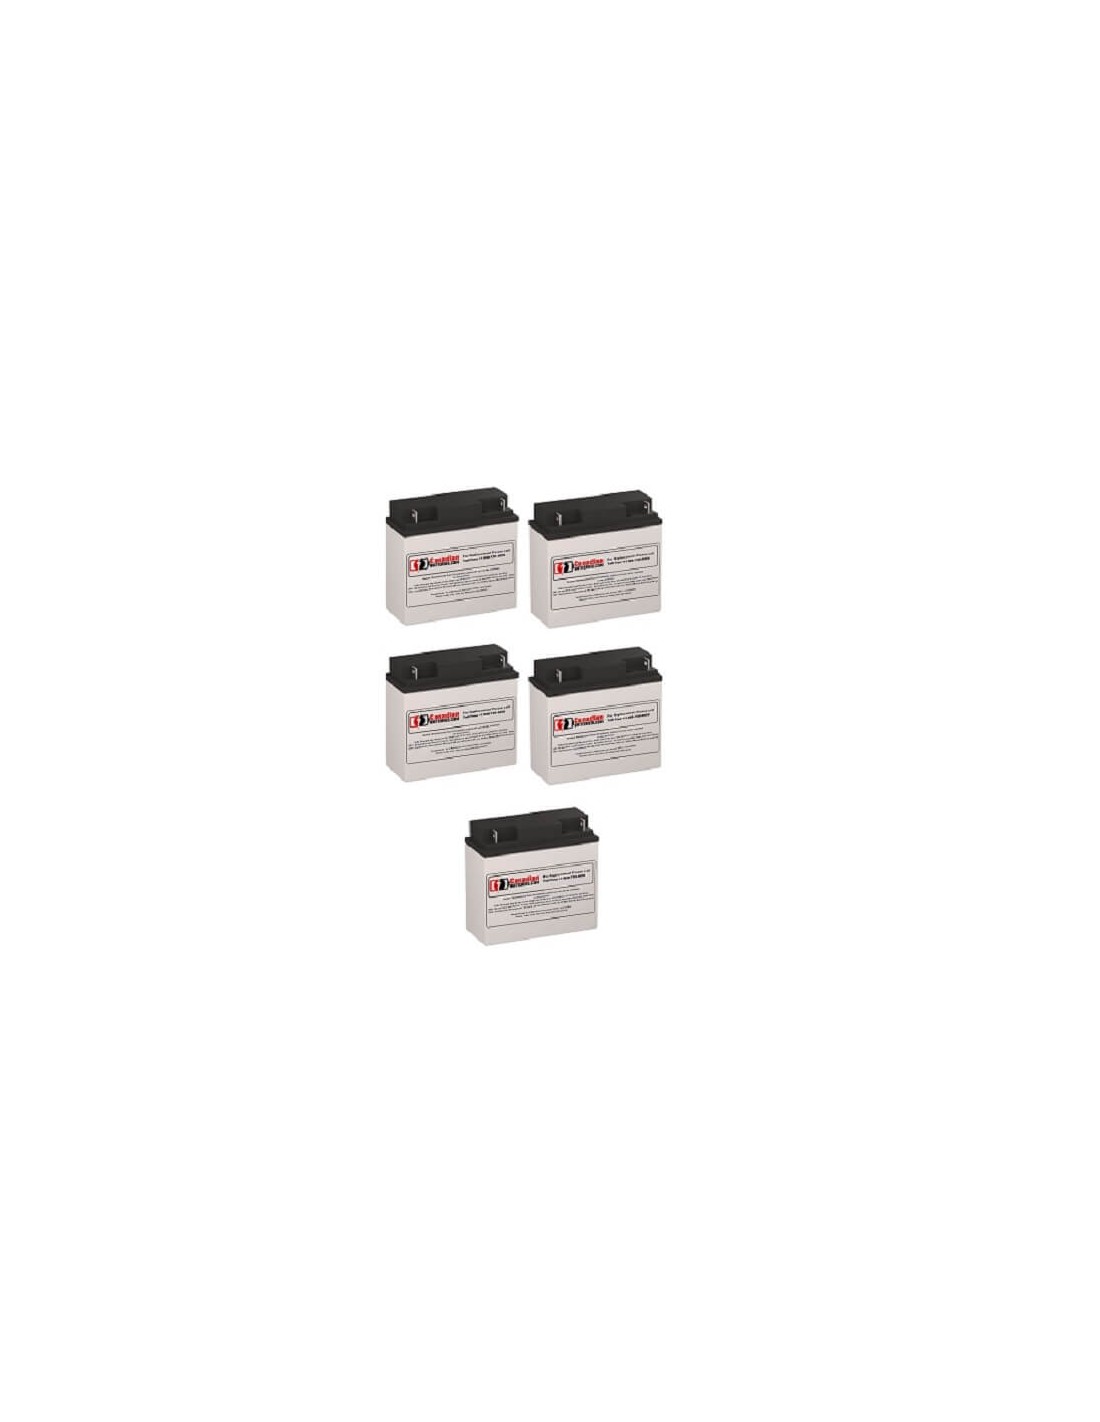 Batteries for Mitsubishi 7011a-30 UPS, 5 x 12V, 18Ah - 216Wh